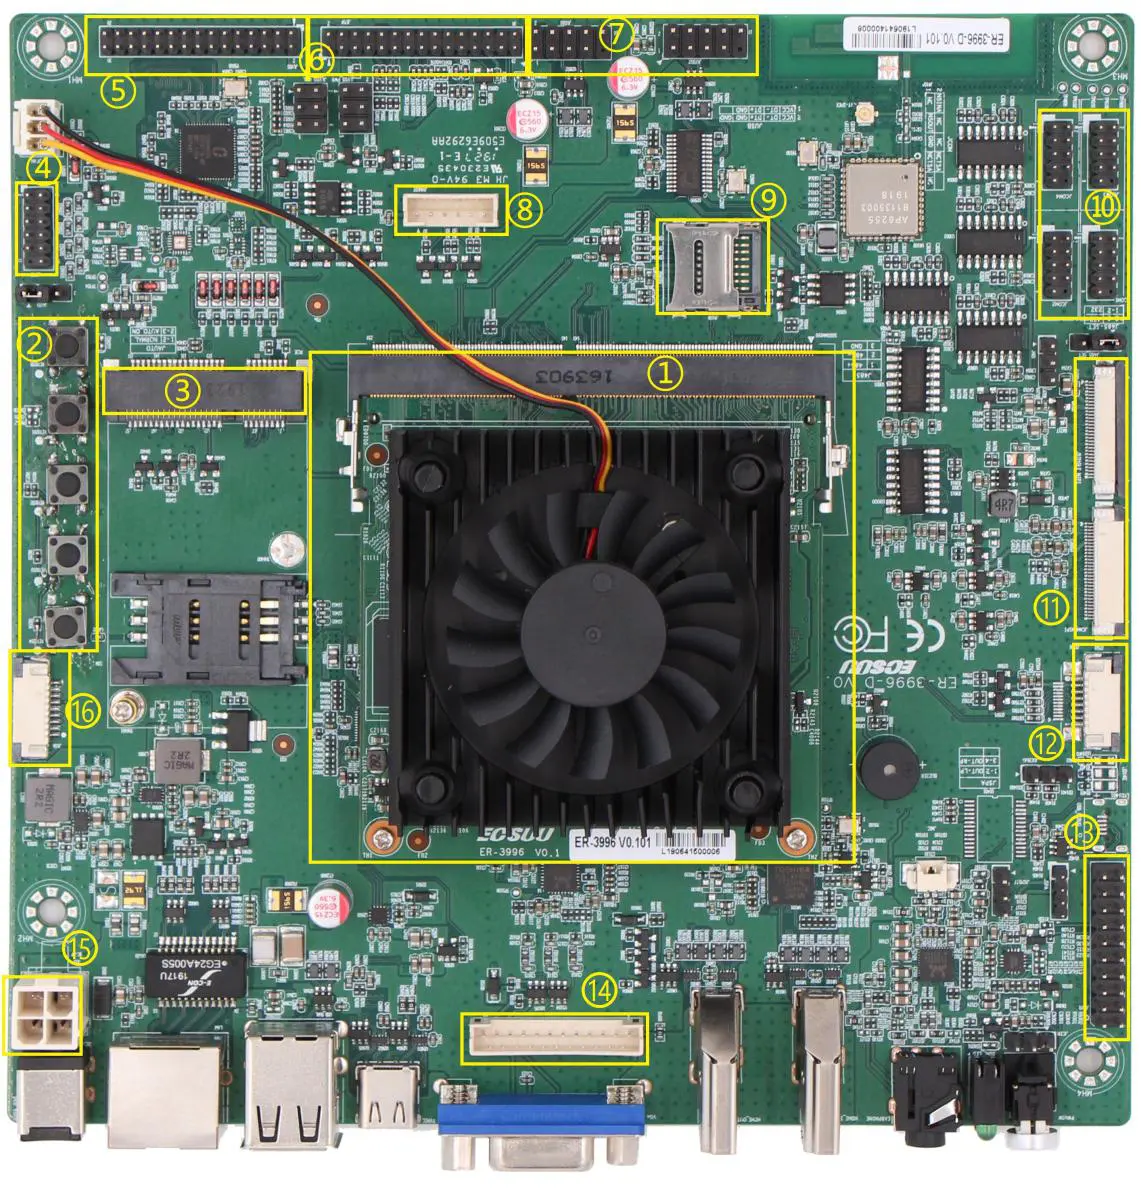 ECSUU ARM 6 코어 64 비트 프로세서 안드로이드 7.1 시스템 락칩 RK3399 CPU eMMC 메인보드